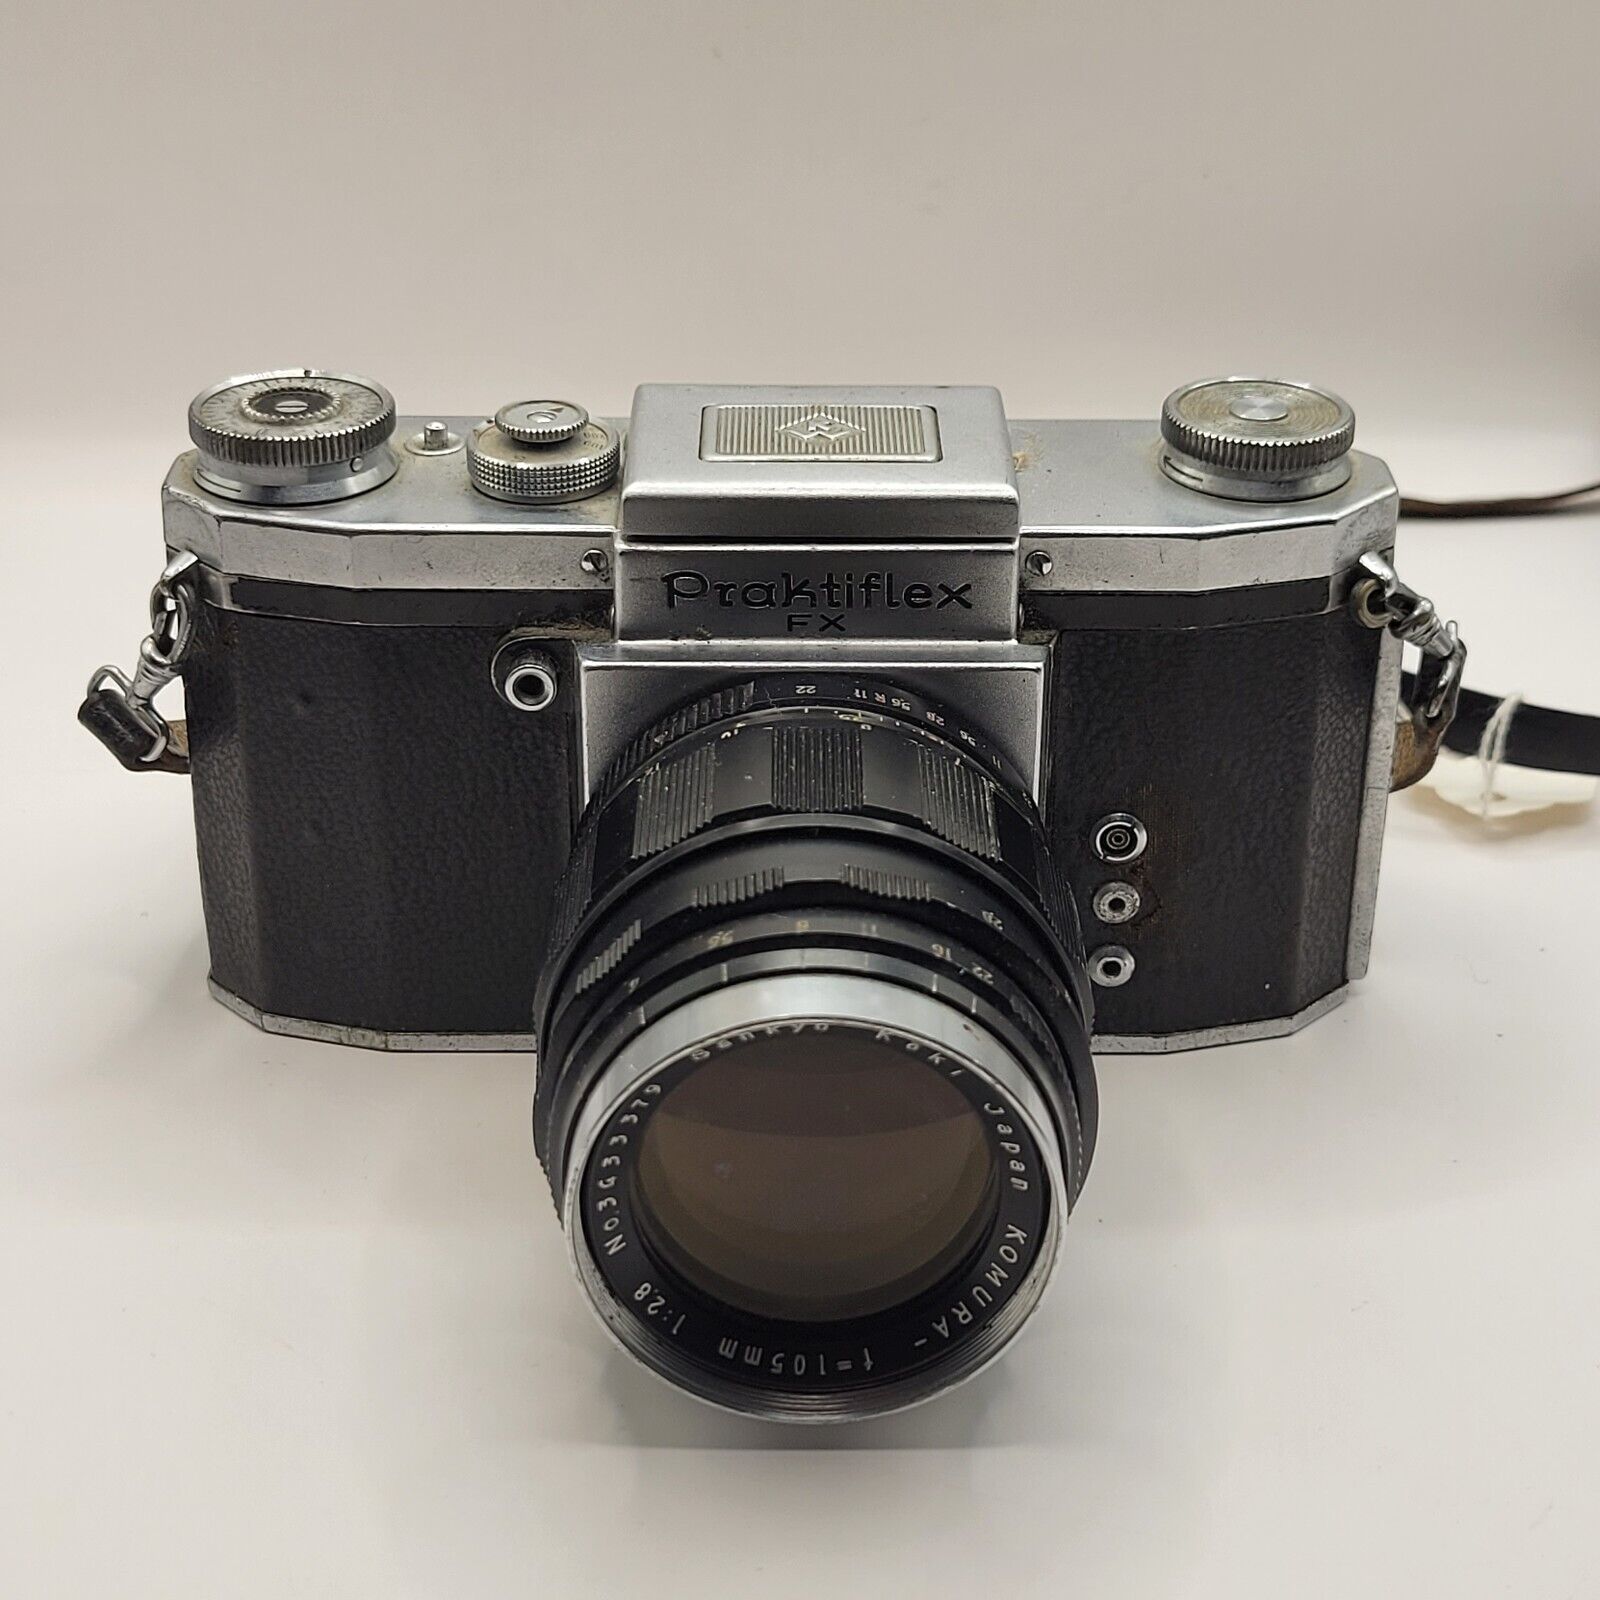 Vtg 1953-54 praktiflex fx camera Kimura f=105mm 1:28 lens photography \